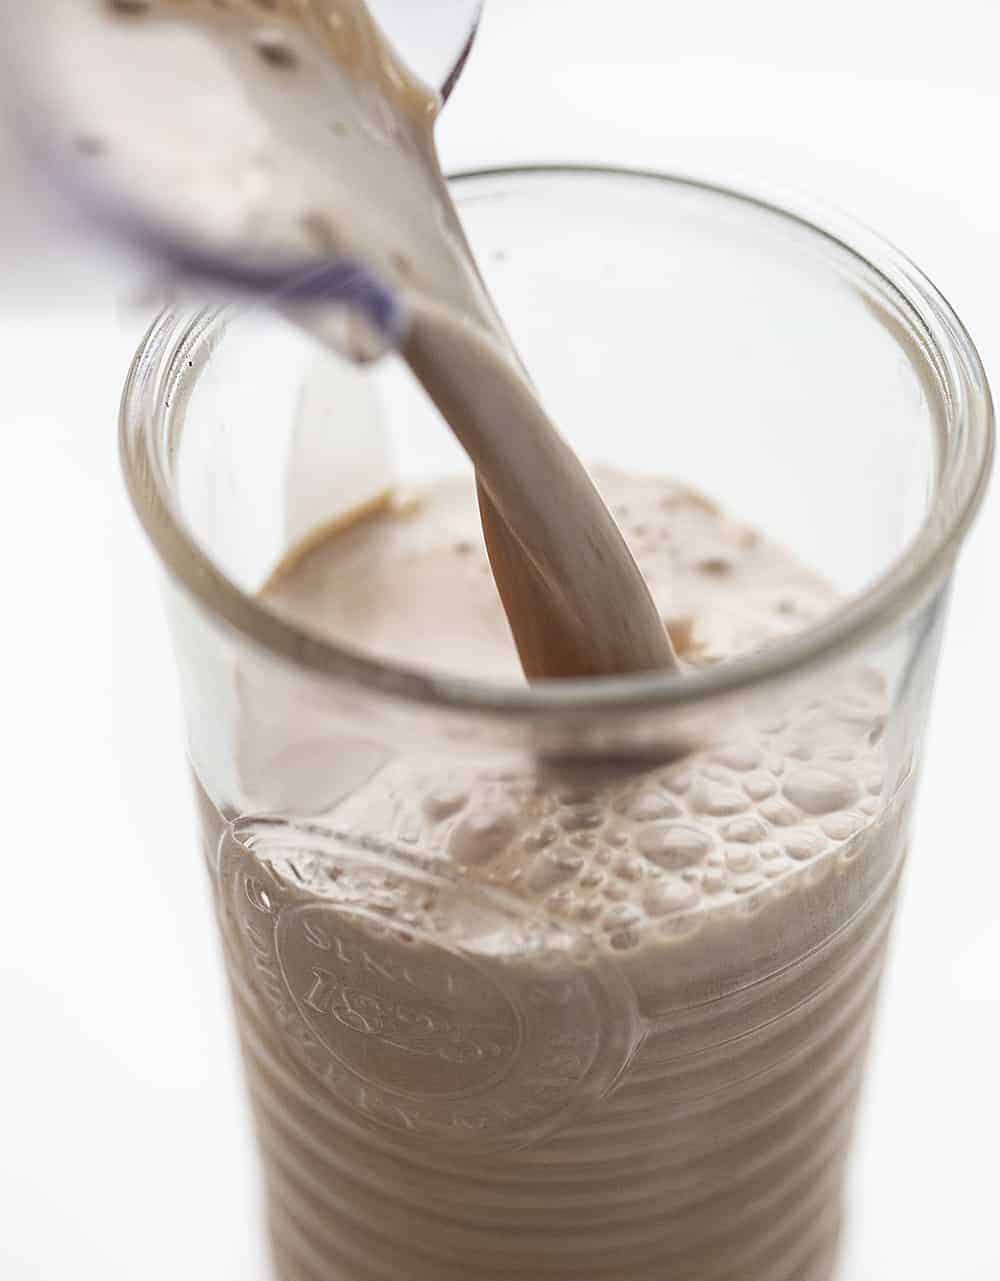 Pouring Homemade Chocolate Milk into Glass